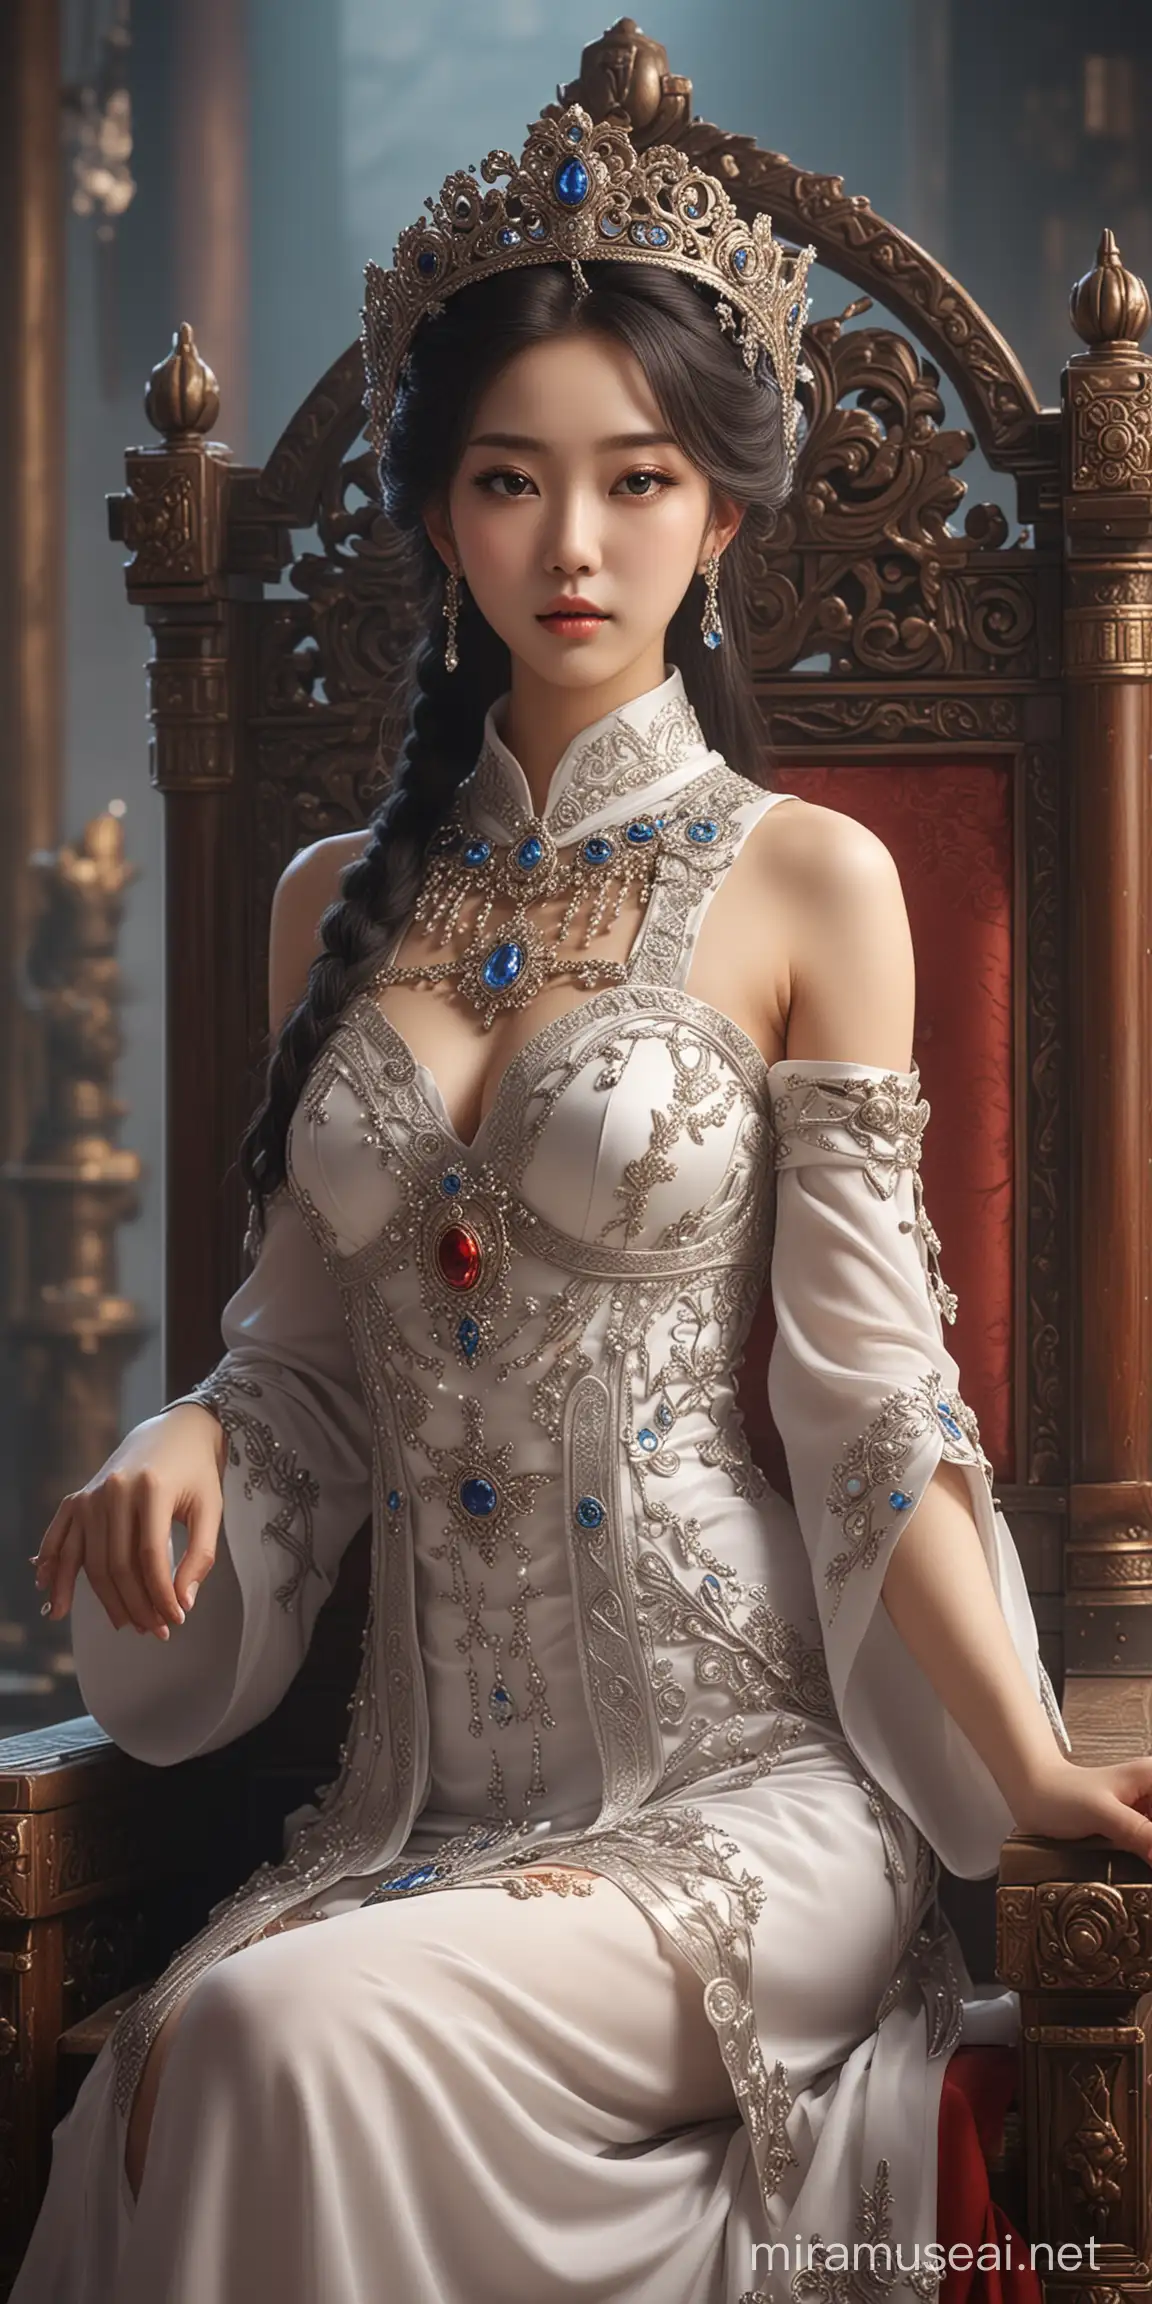 Elegant Empress Sitting on Fantasy Throne in Detailed Studio Art